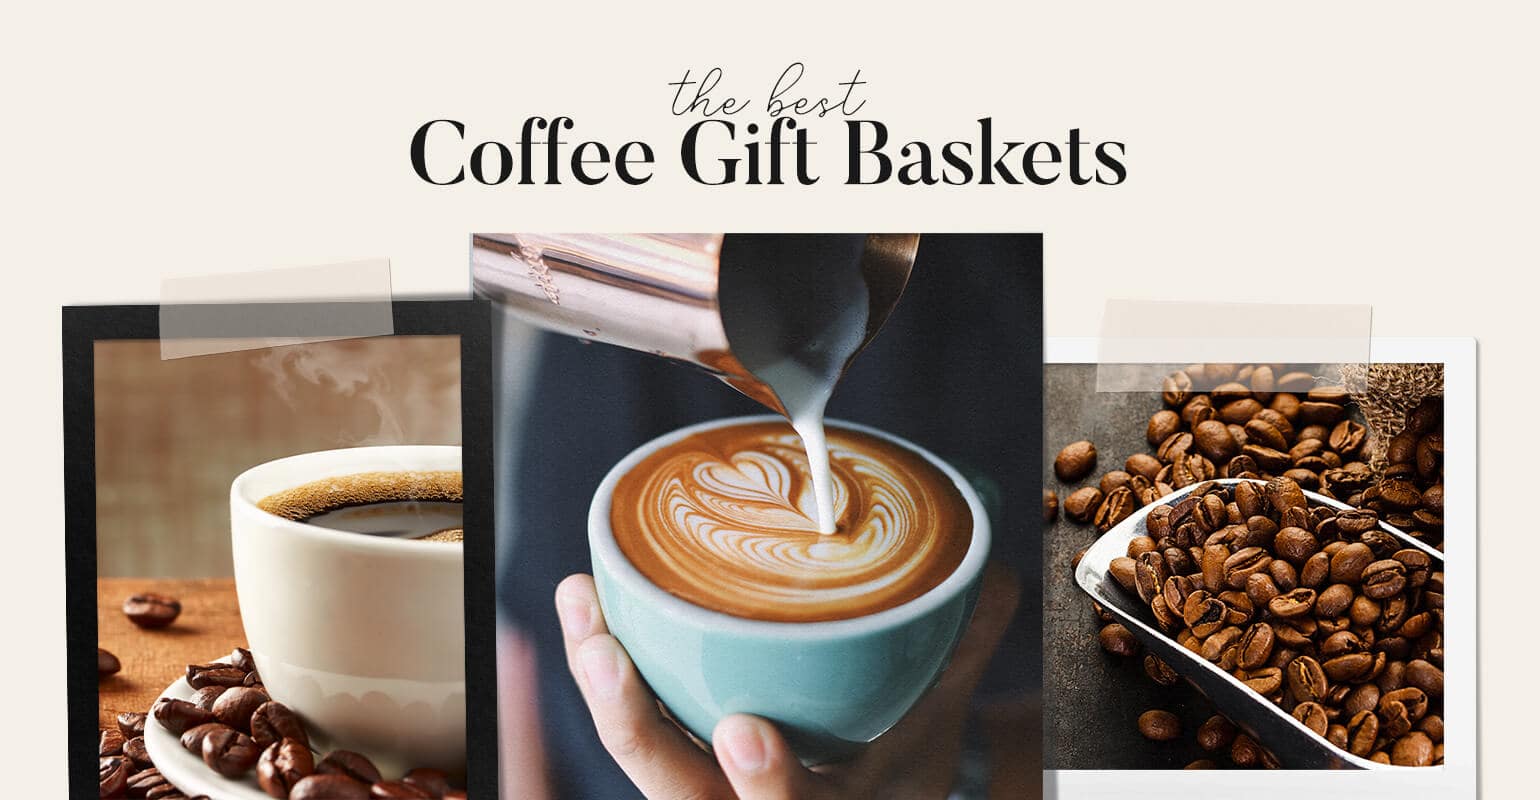 Best Coffee Gift Baskets